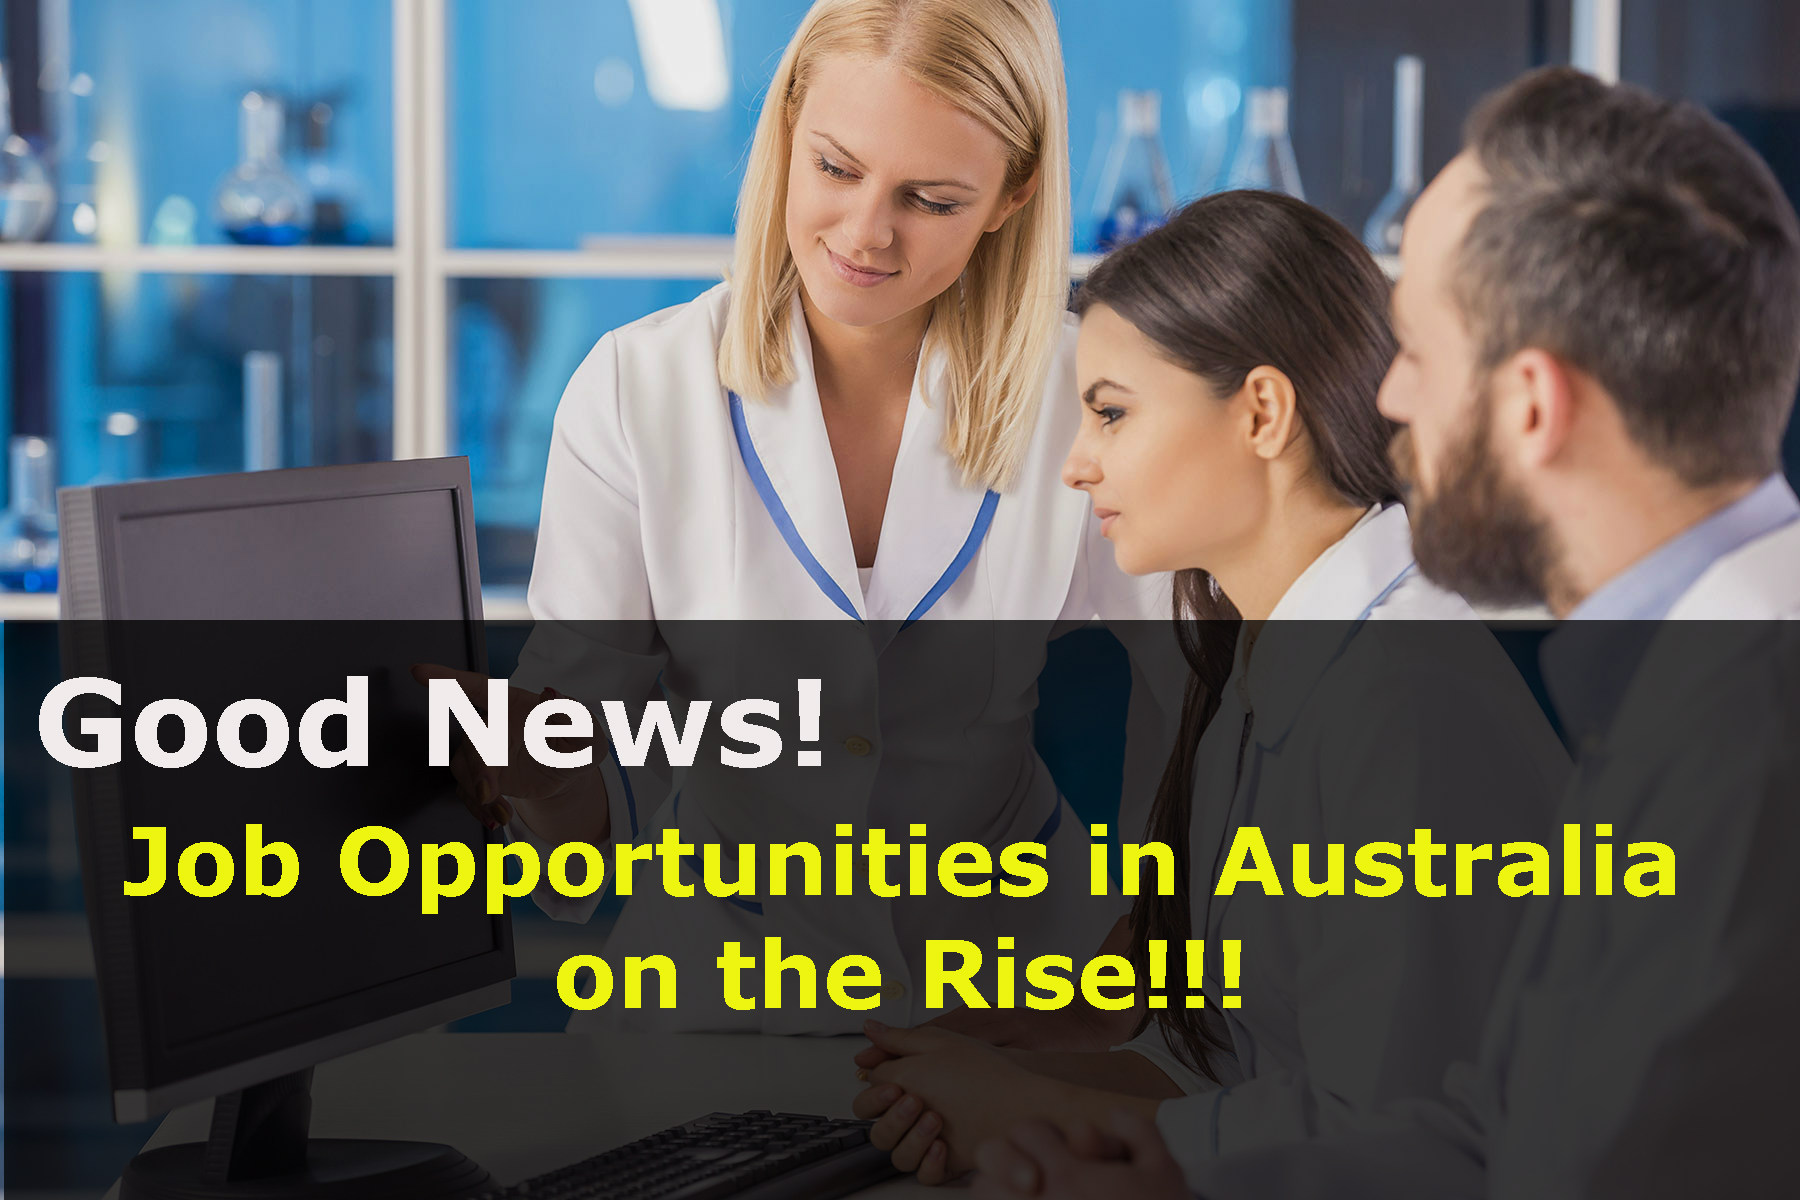 Good News! Job Opportunities in Australia on the Rise